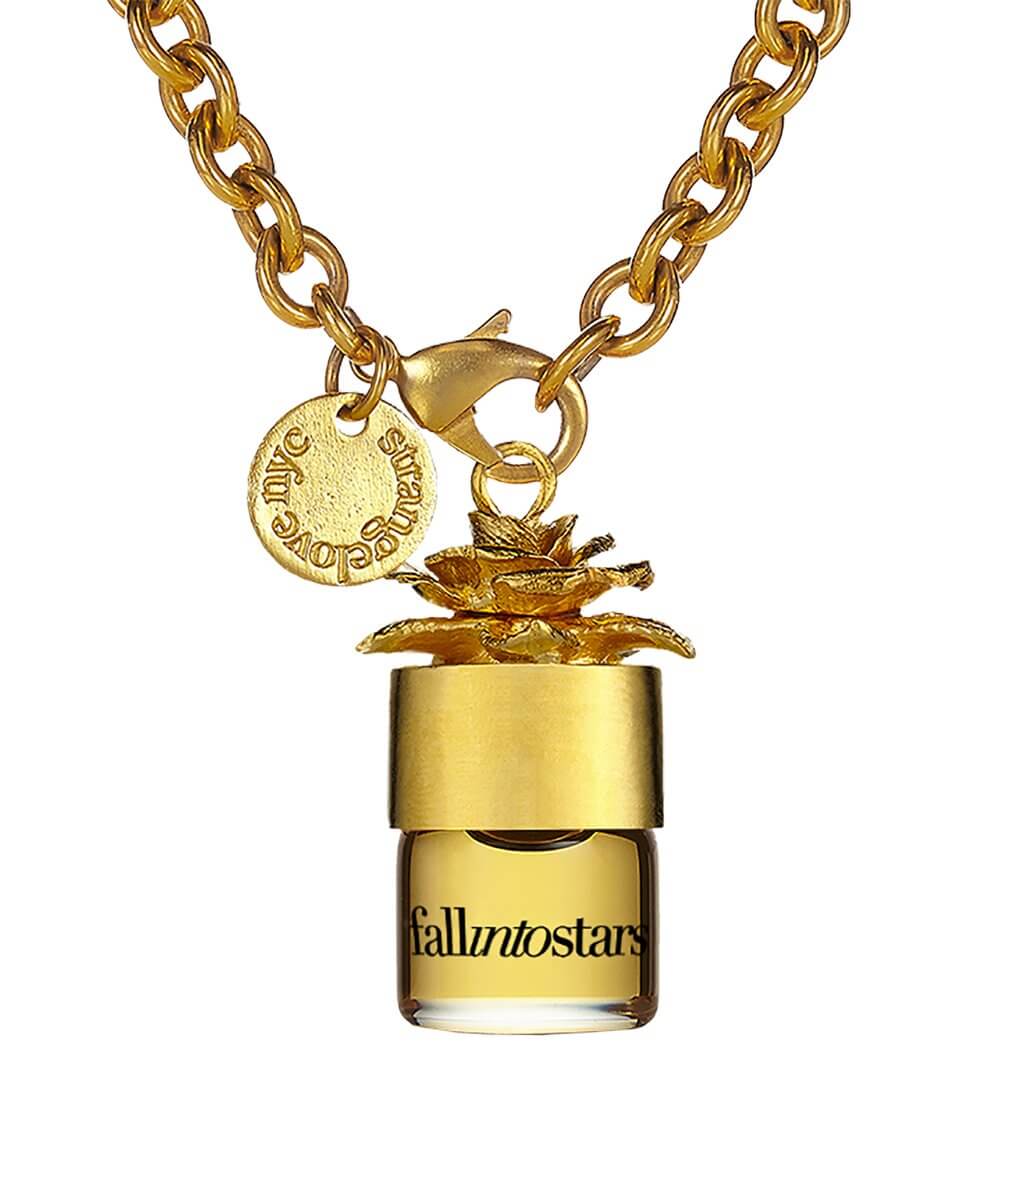 fallintostars 1.25 ml. perfume oil necklace by strangelove at Indigo 